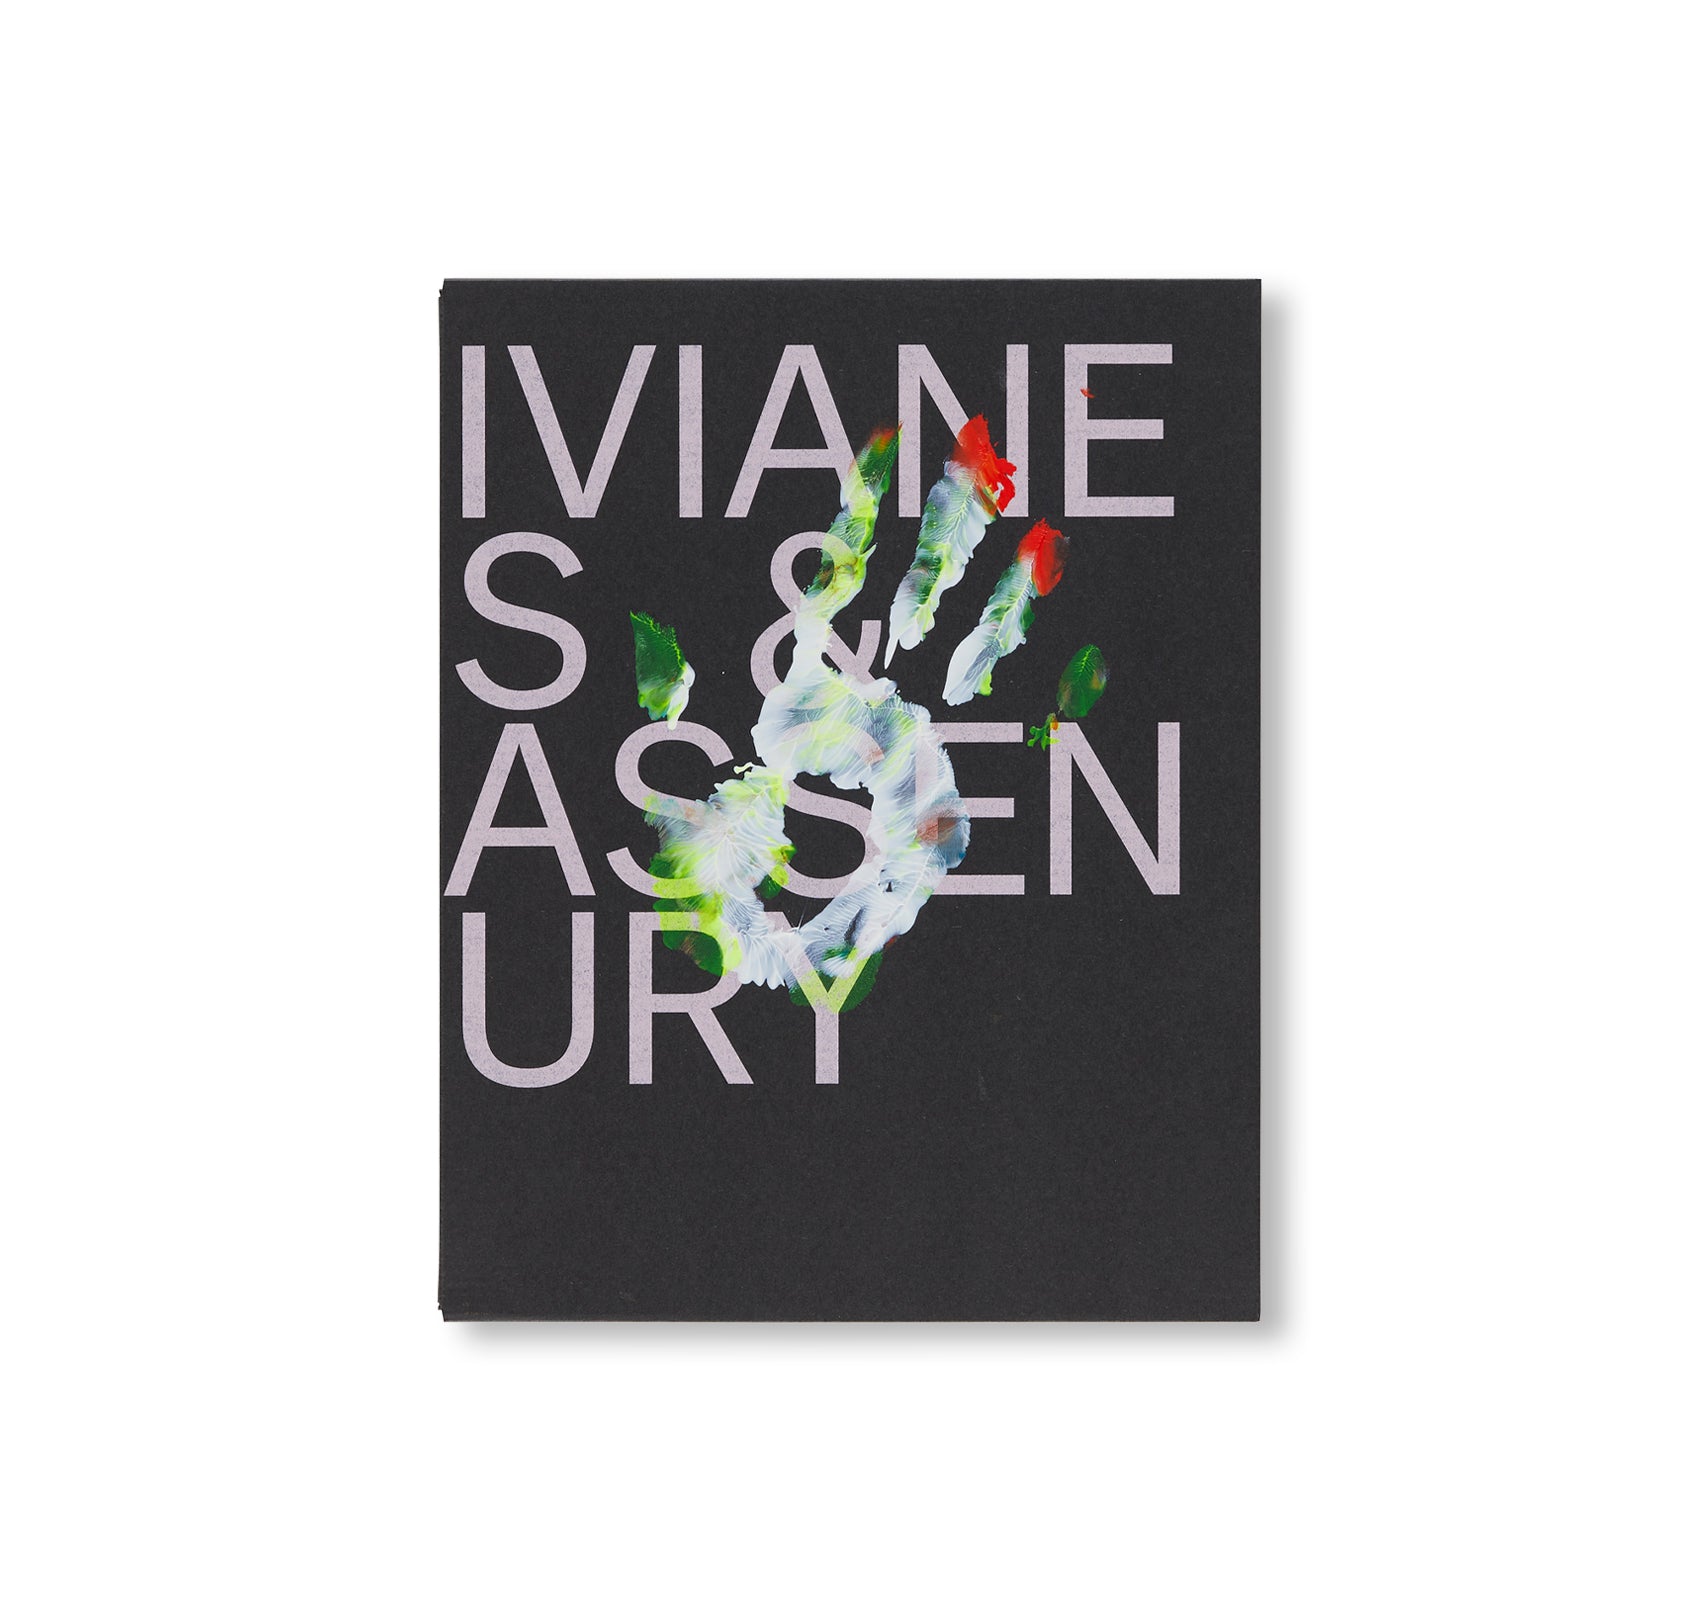 VENUS & MERCURY by Viviane Sassen